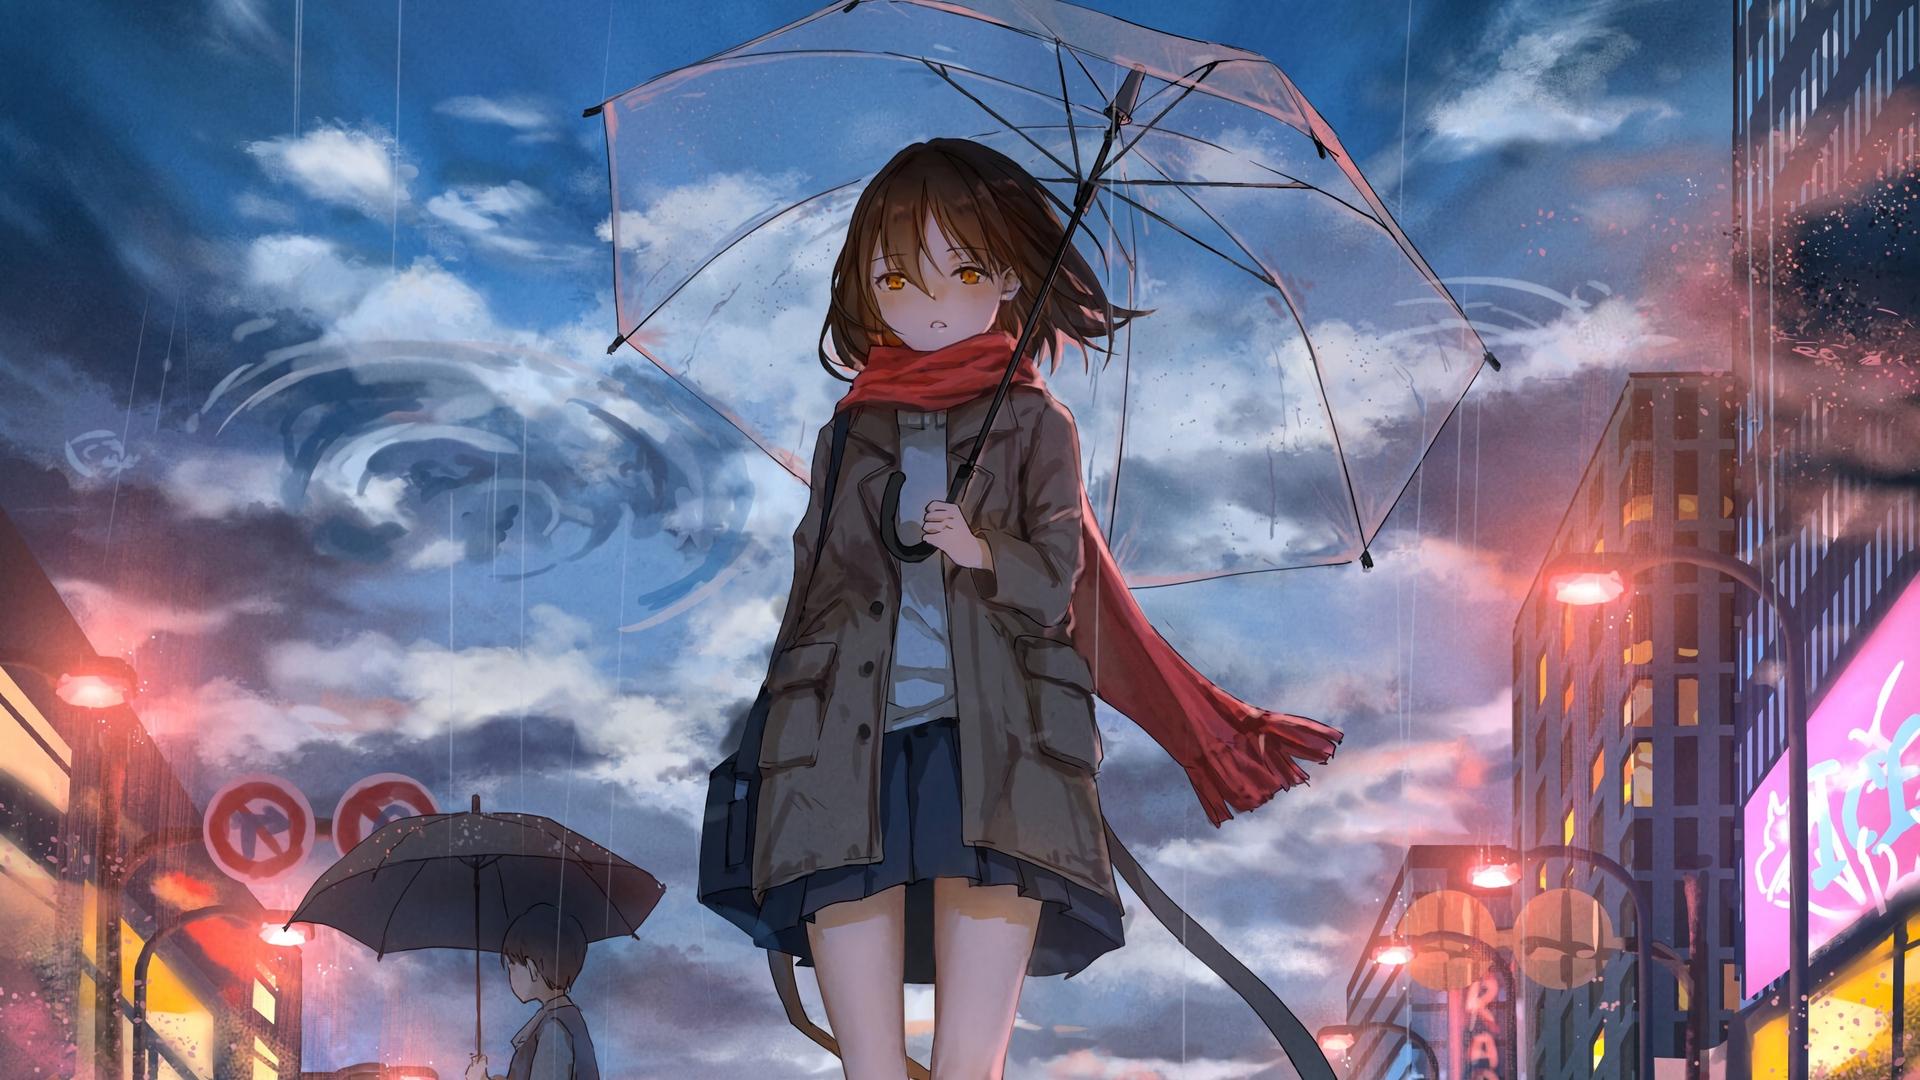 Download wallpaper 1920x1080 girl, umbrella, anime, rain, sadness full hd, hdtv, fhd, 1080p HD background